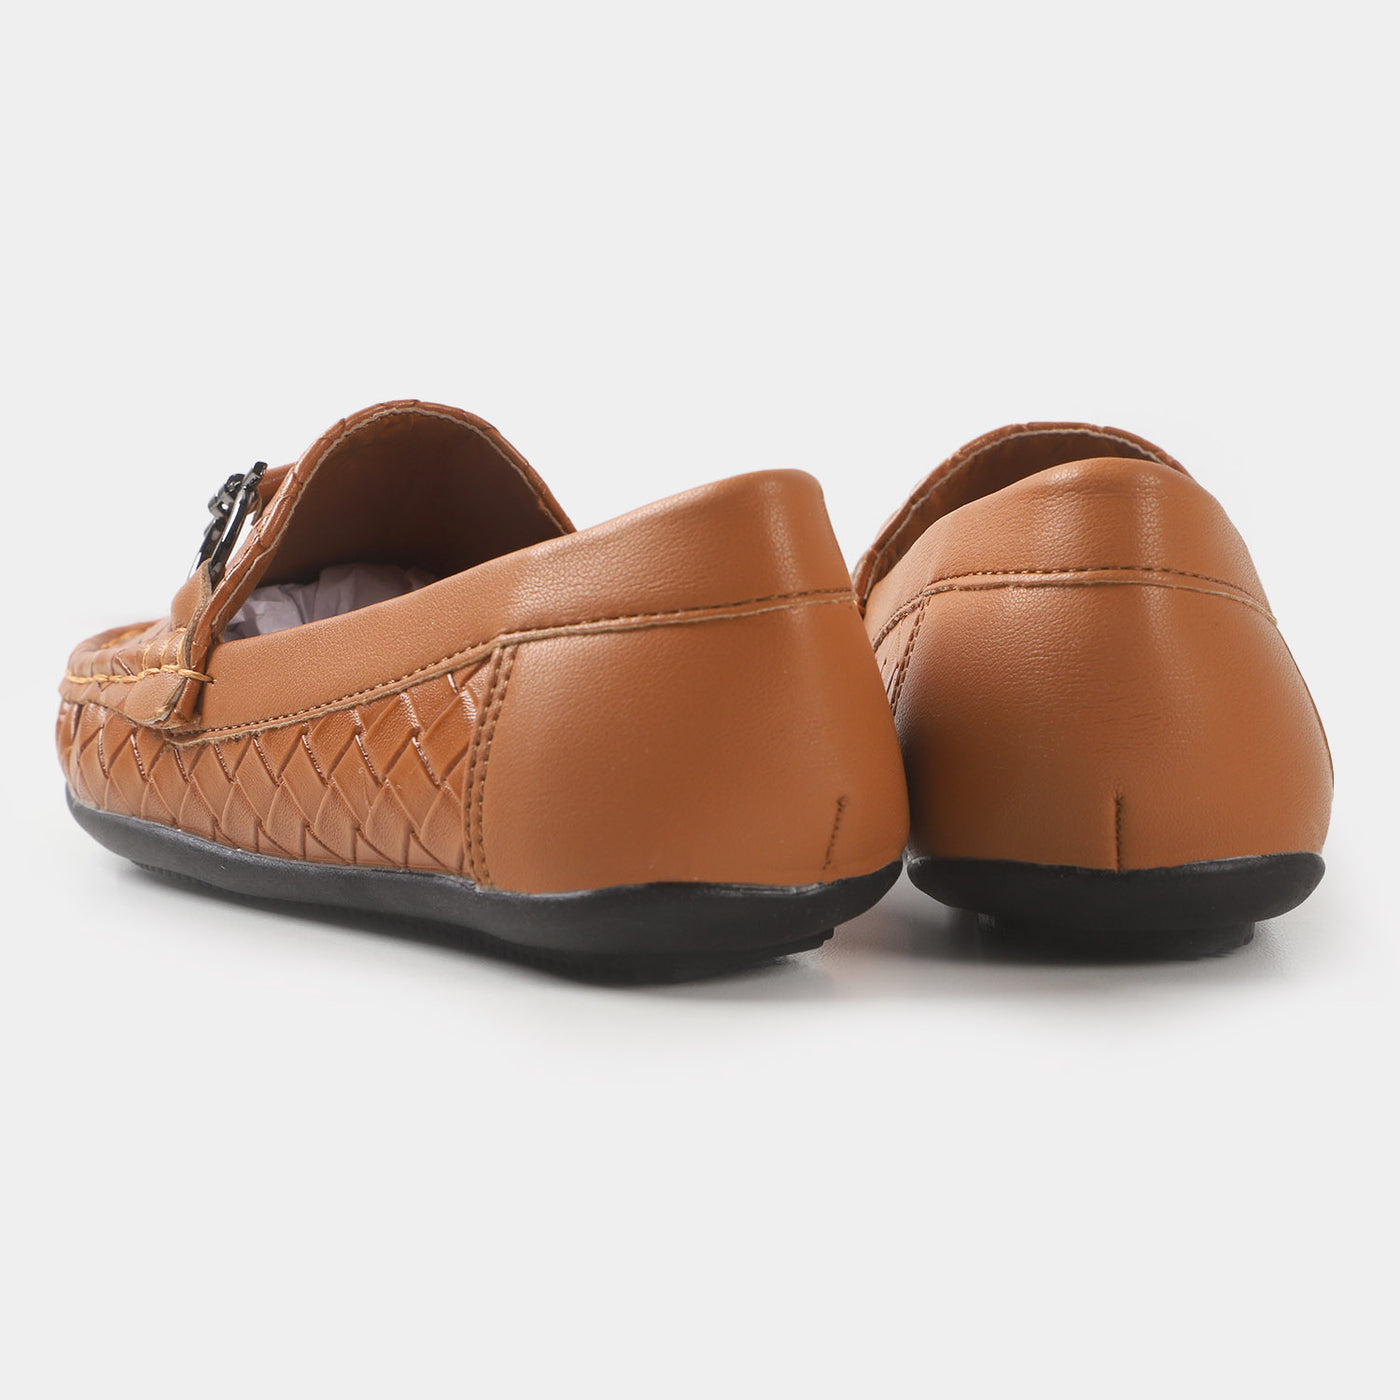 Boys loafers 202109-8 - CAMEL